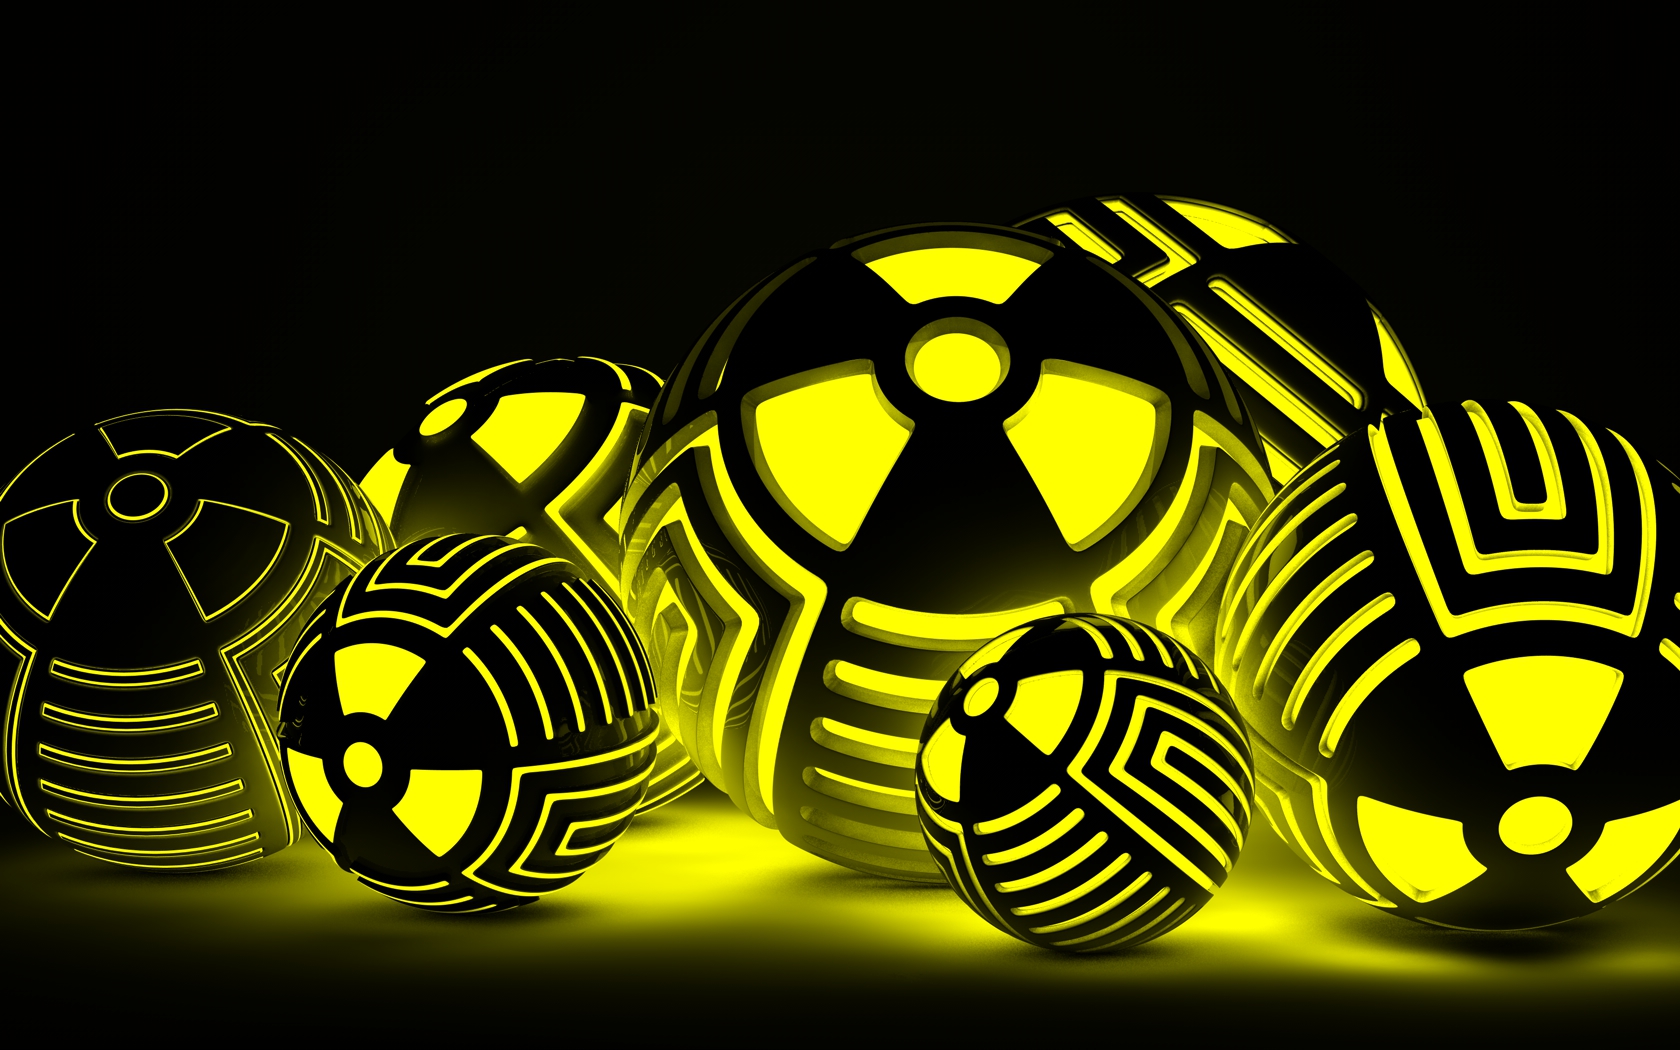 Radioactive glowing Balls by Dracu-Teufel666 on DeviantArt